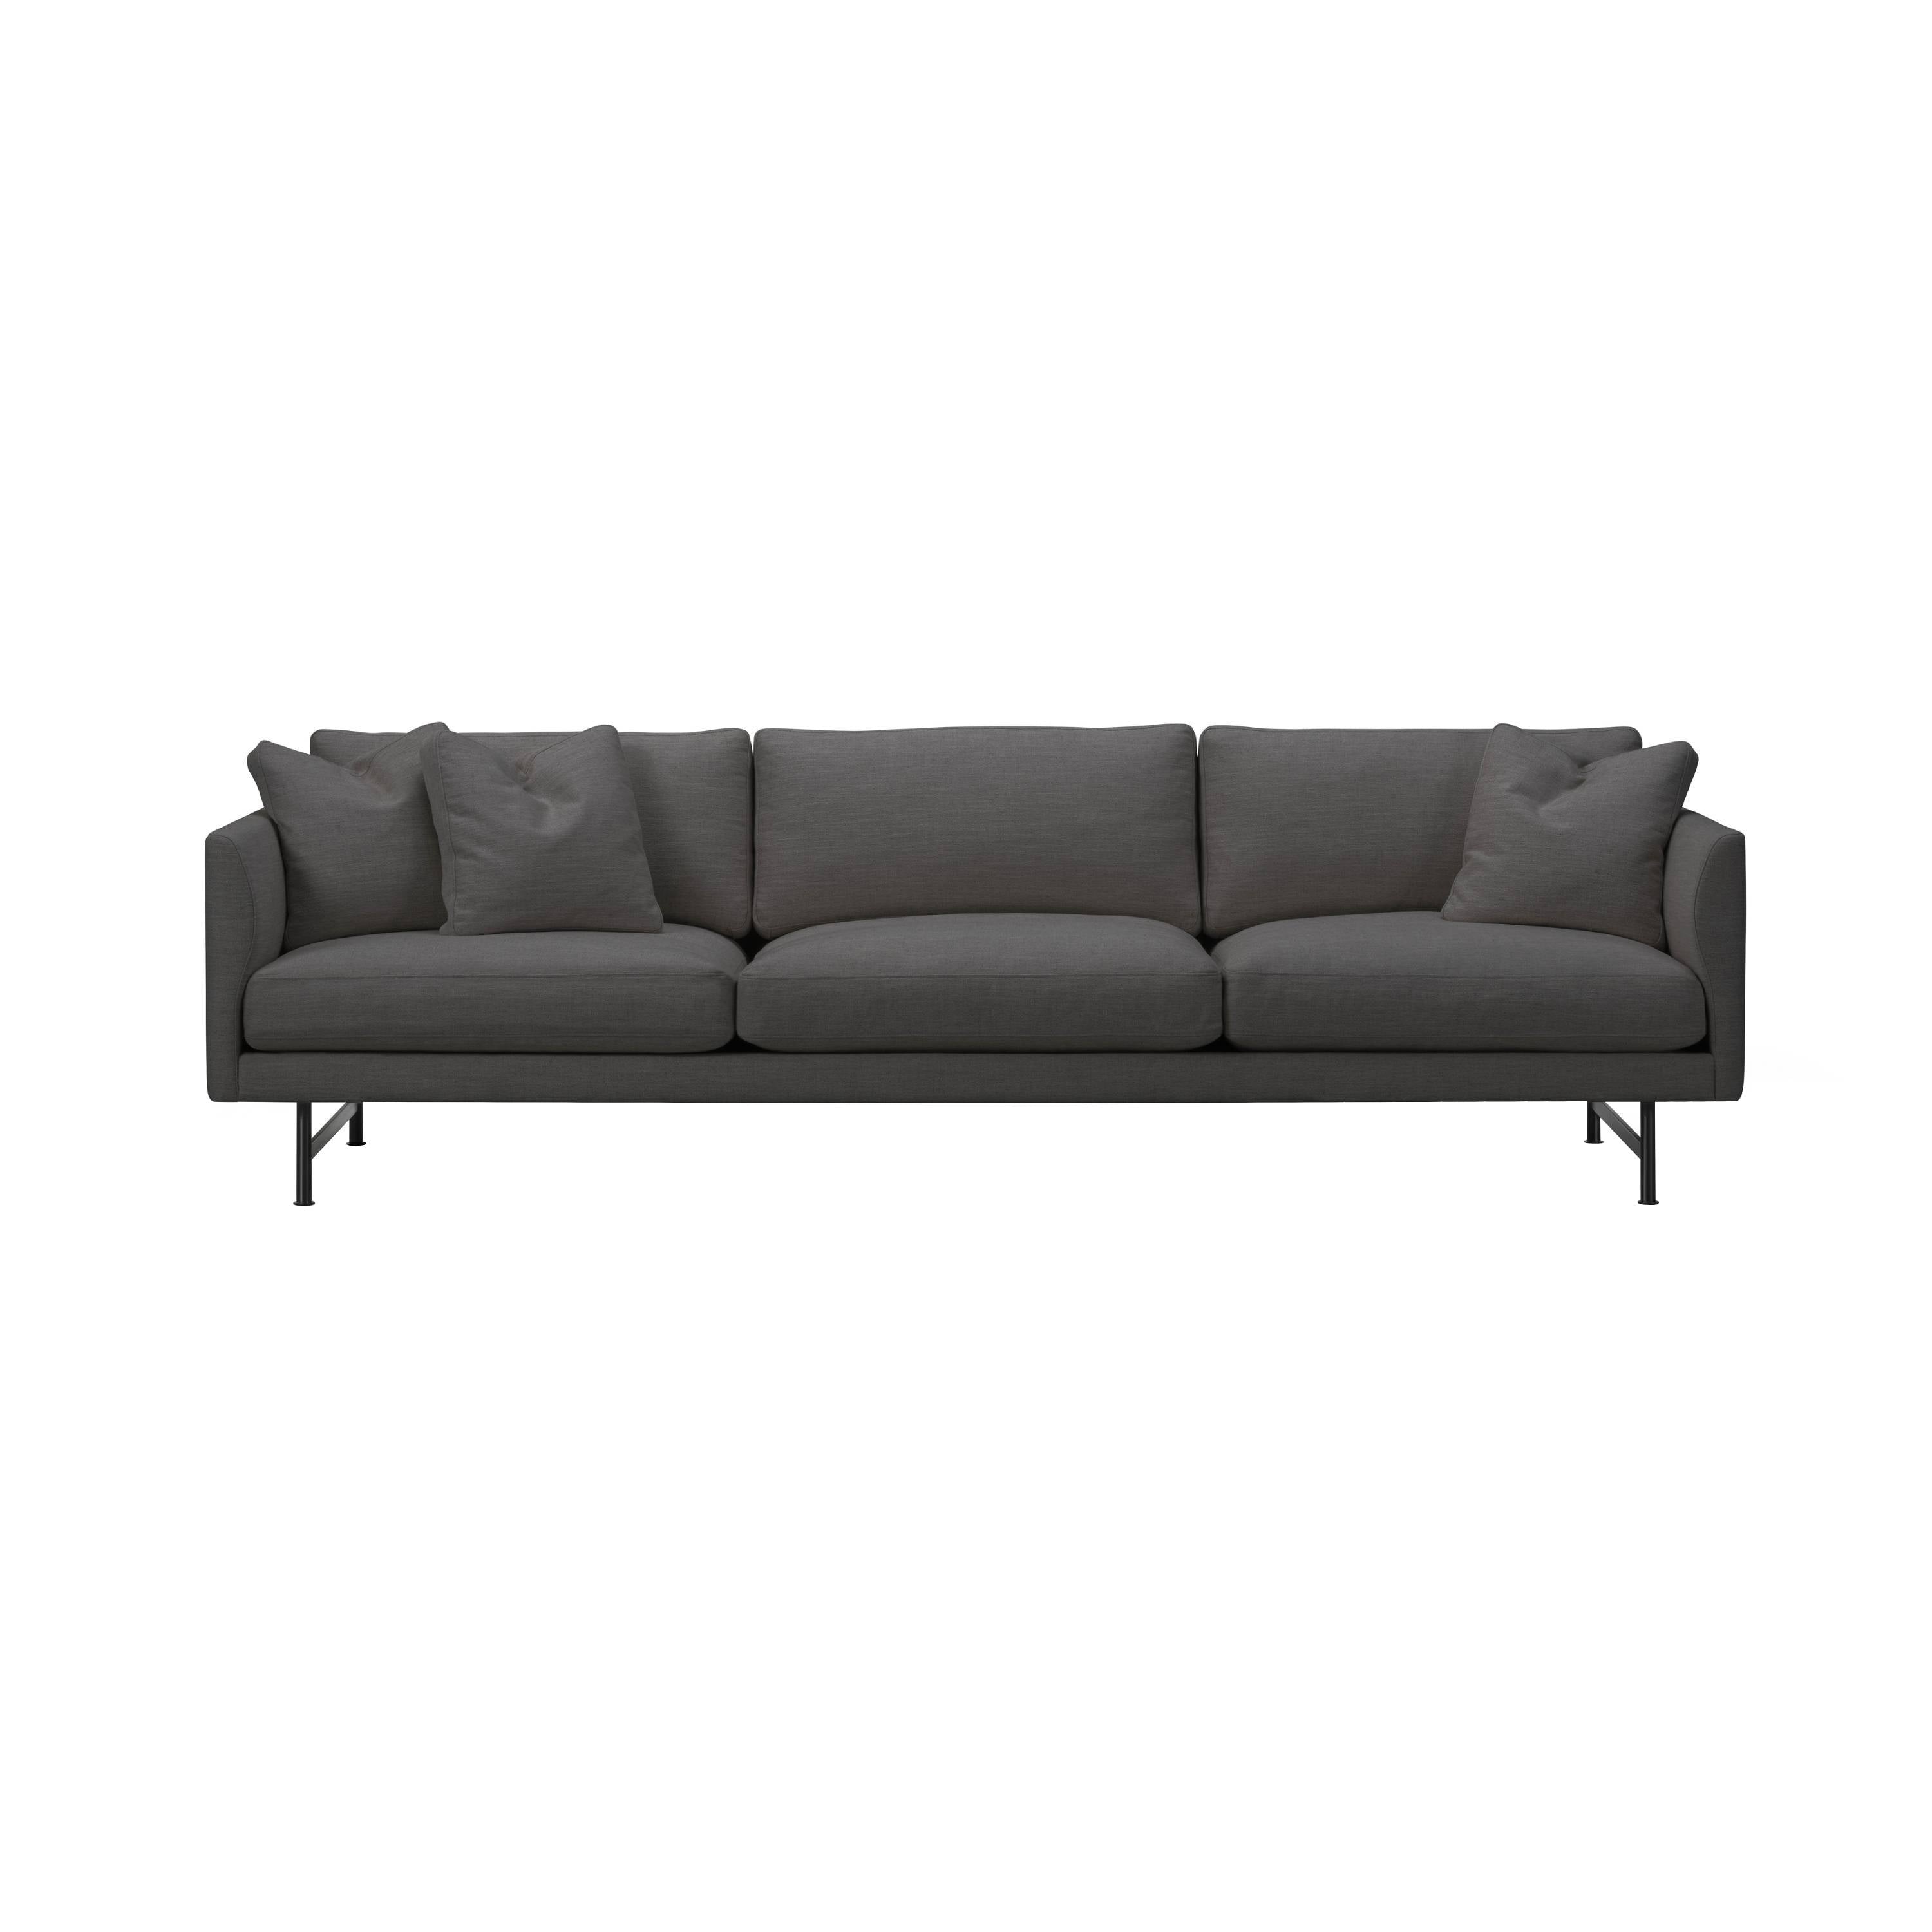 Calmo 3 Seater Sofa: Metal Base + Small - 98.4